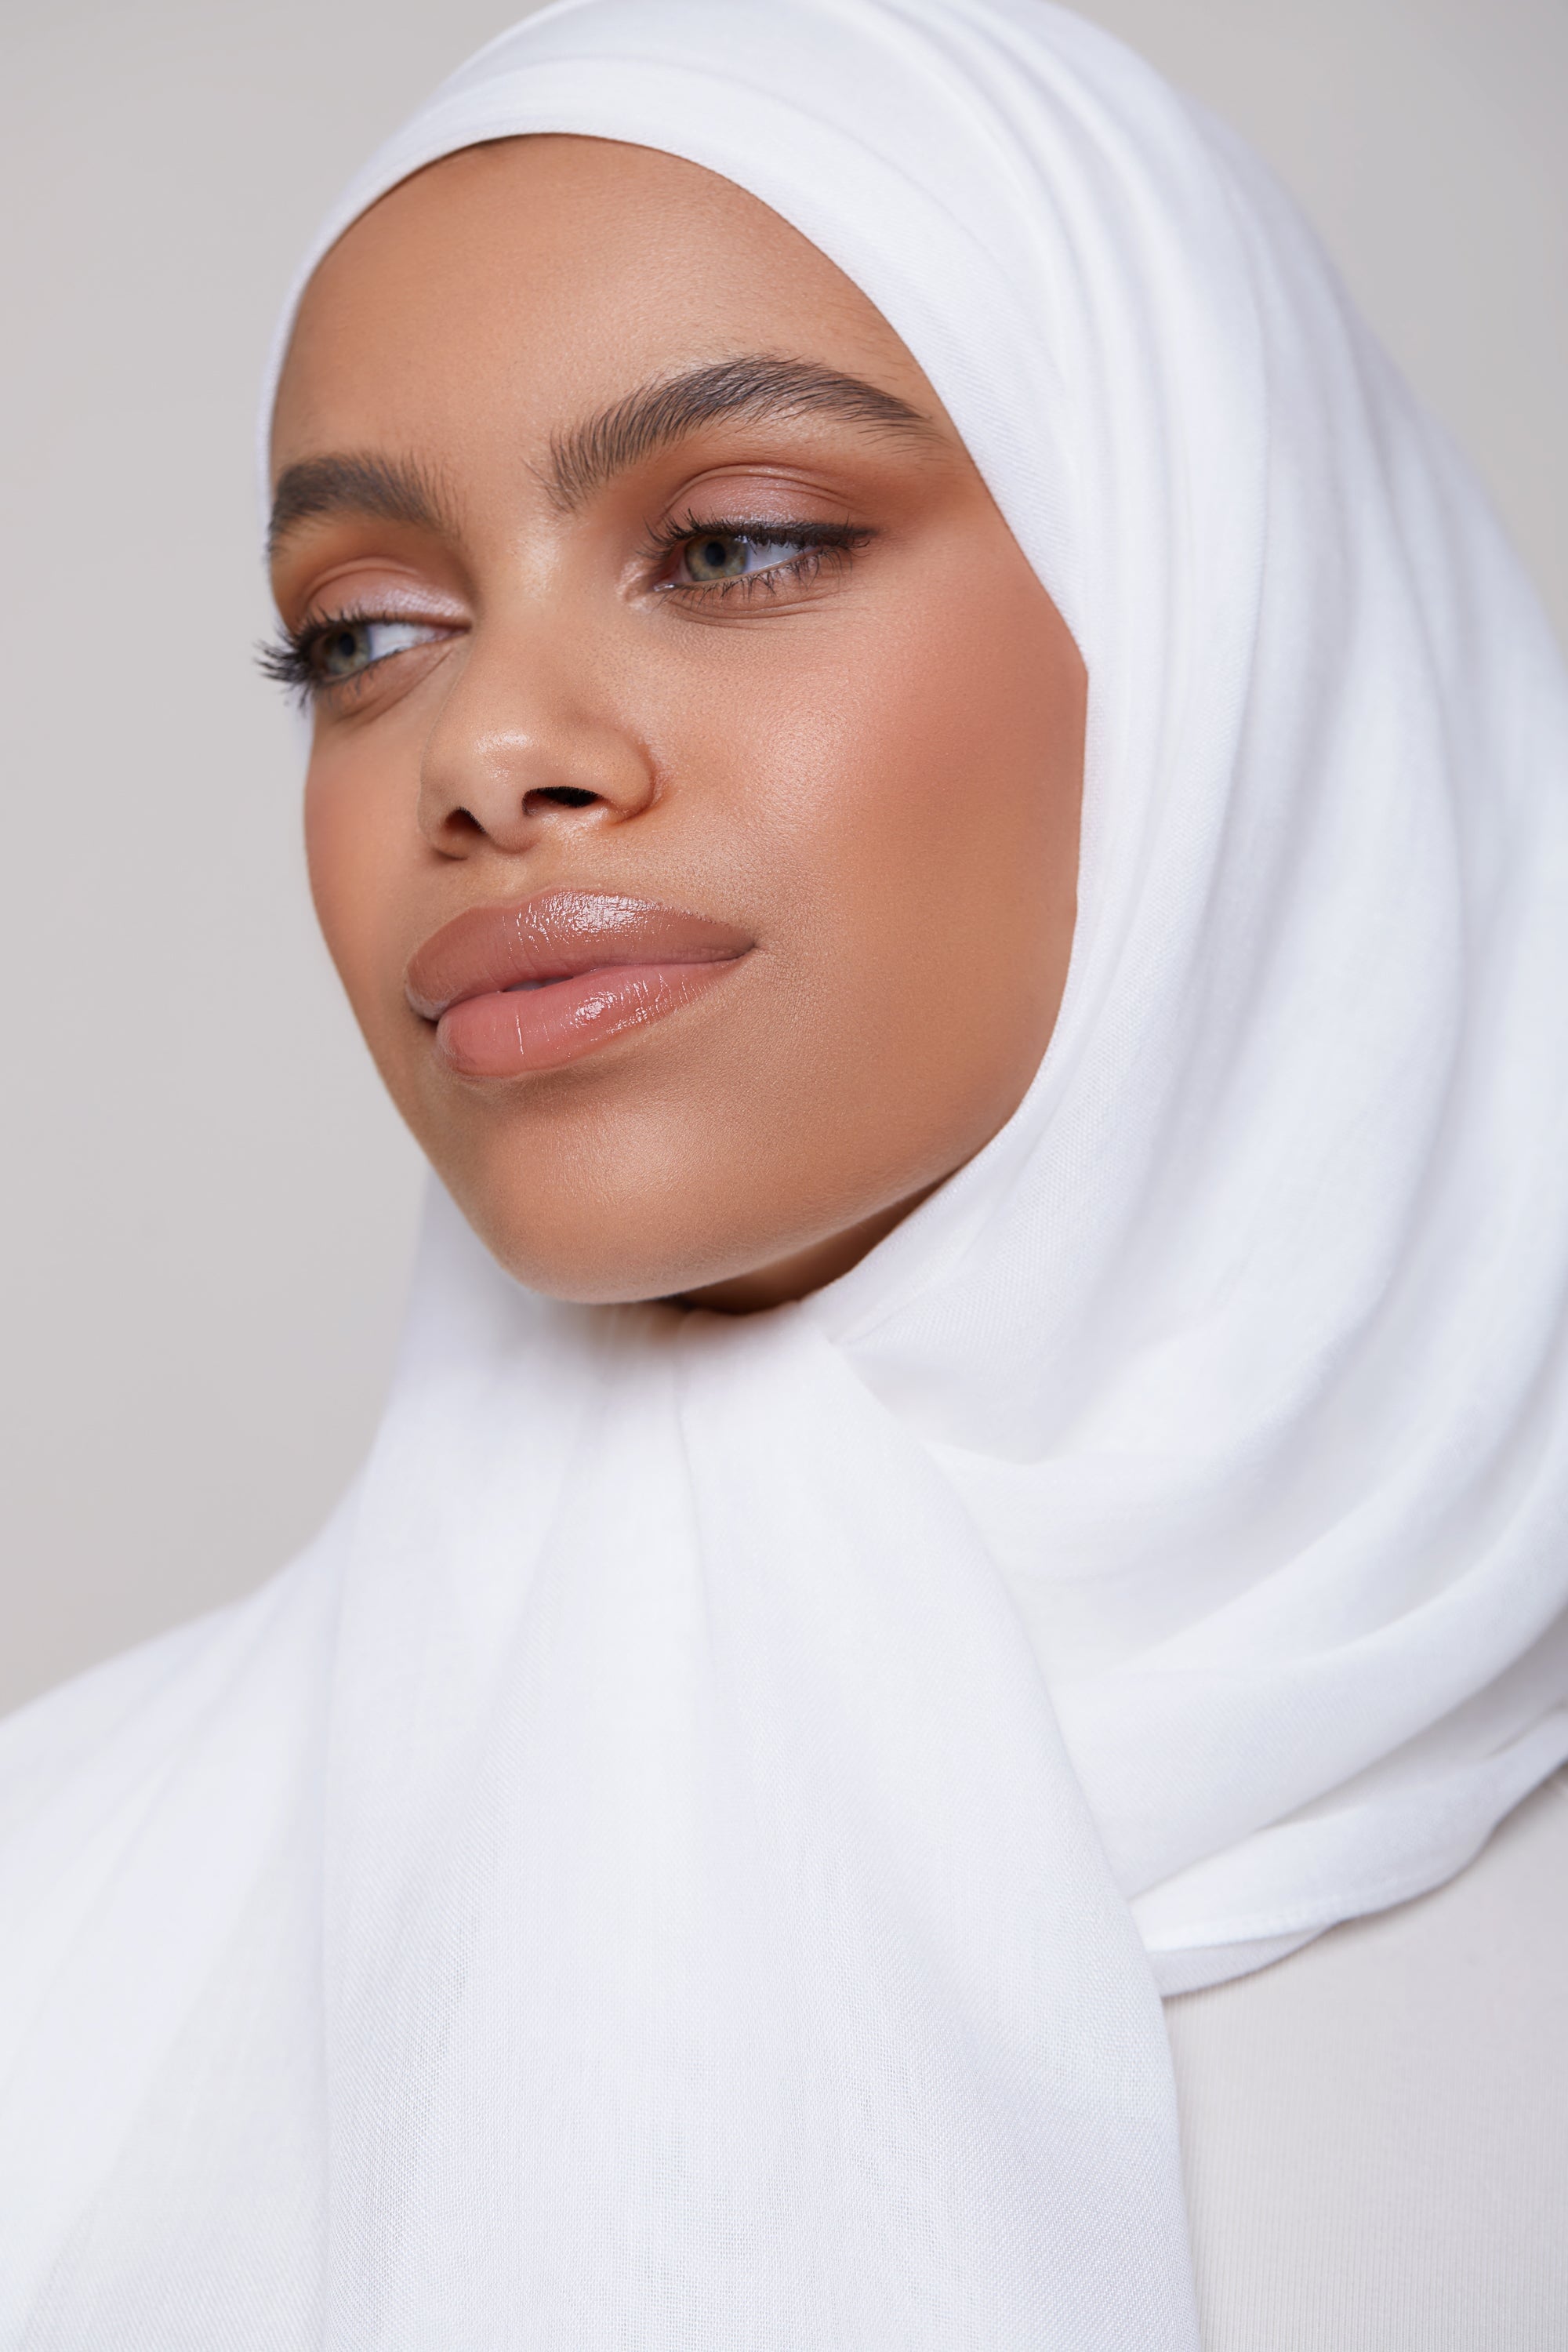 Modal Hijab - White Veiled 